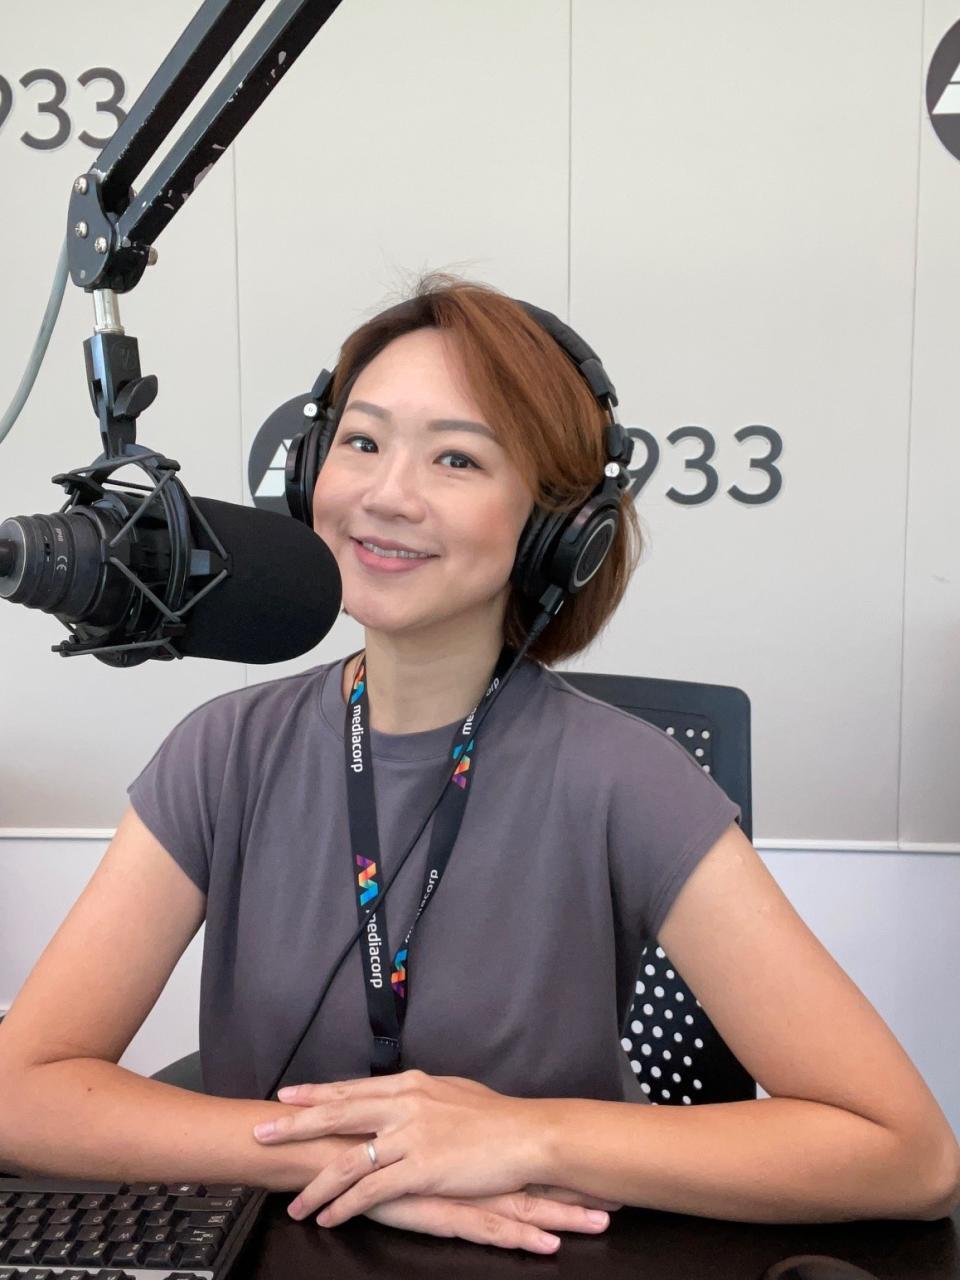 Lim Peifen has 20 years of radio hosting under her belt. PHOTO: Lim Peifen